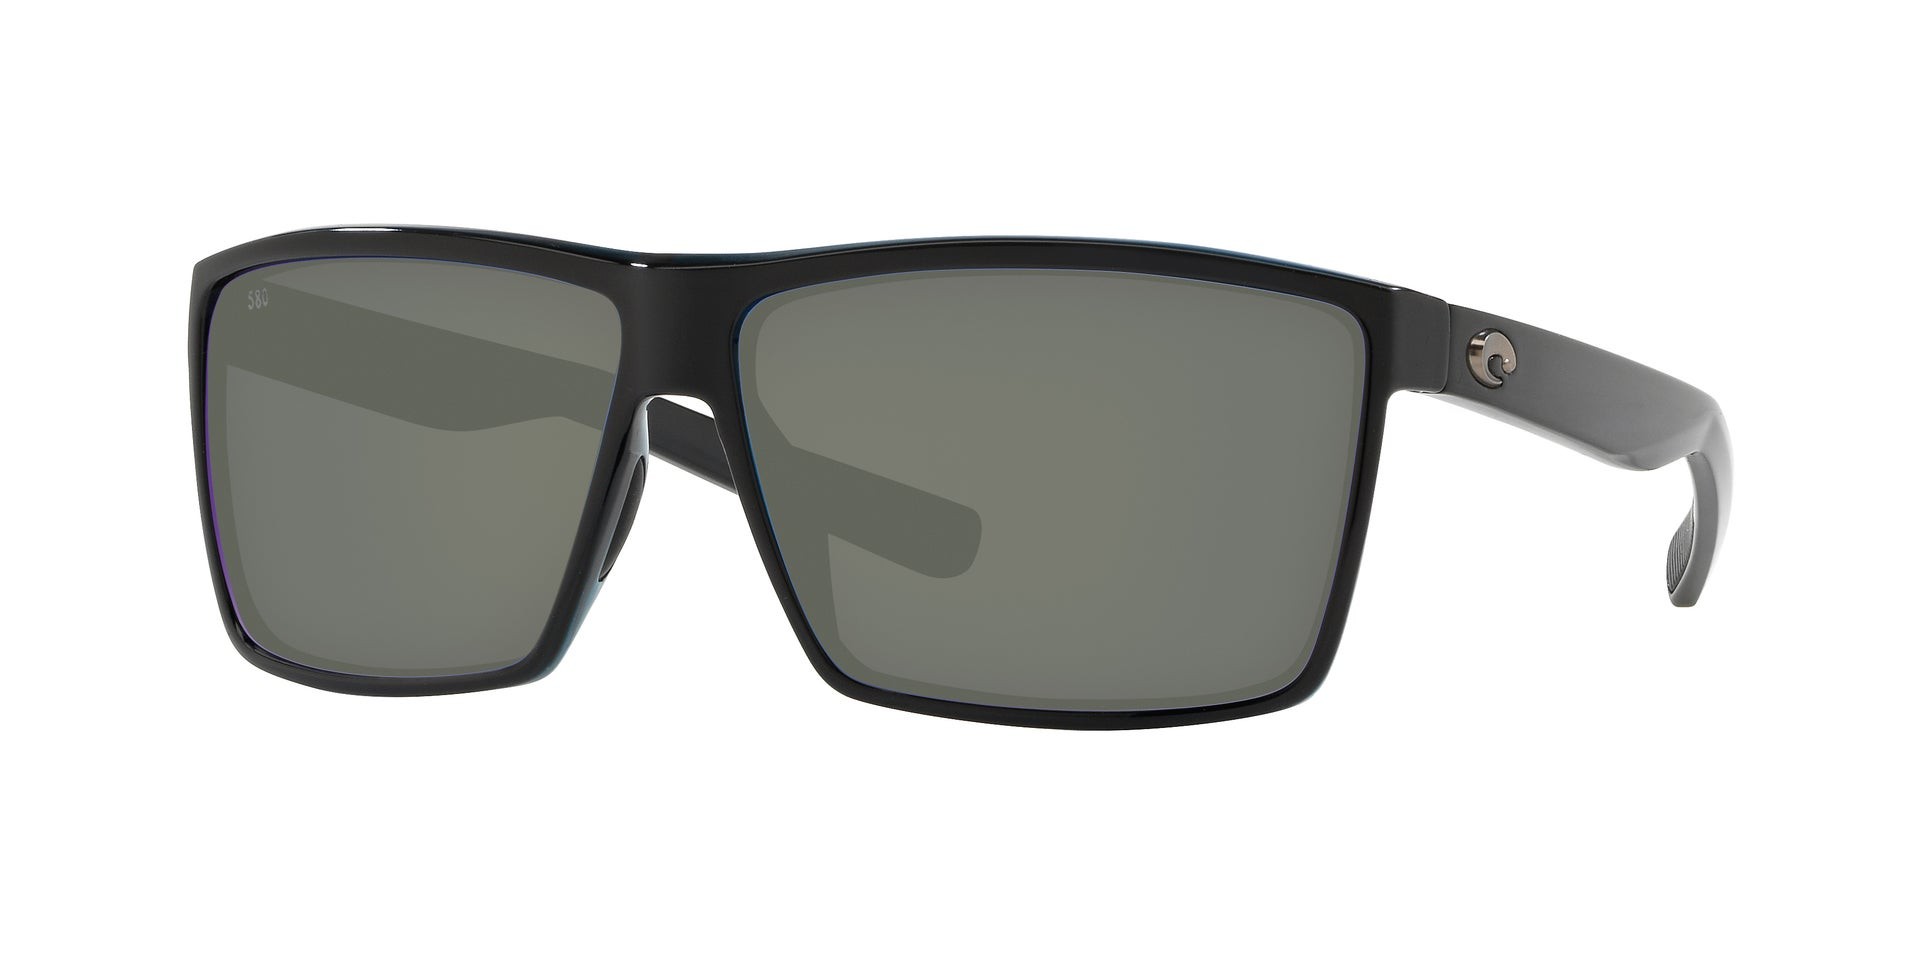 Rincon Shiny Black Sunglasses w/ Polarized 580G Gray Lens